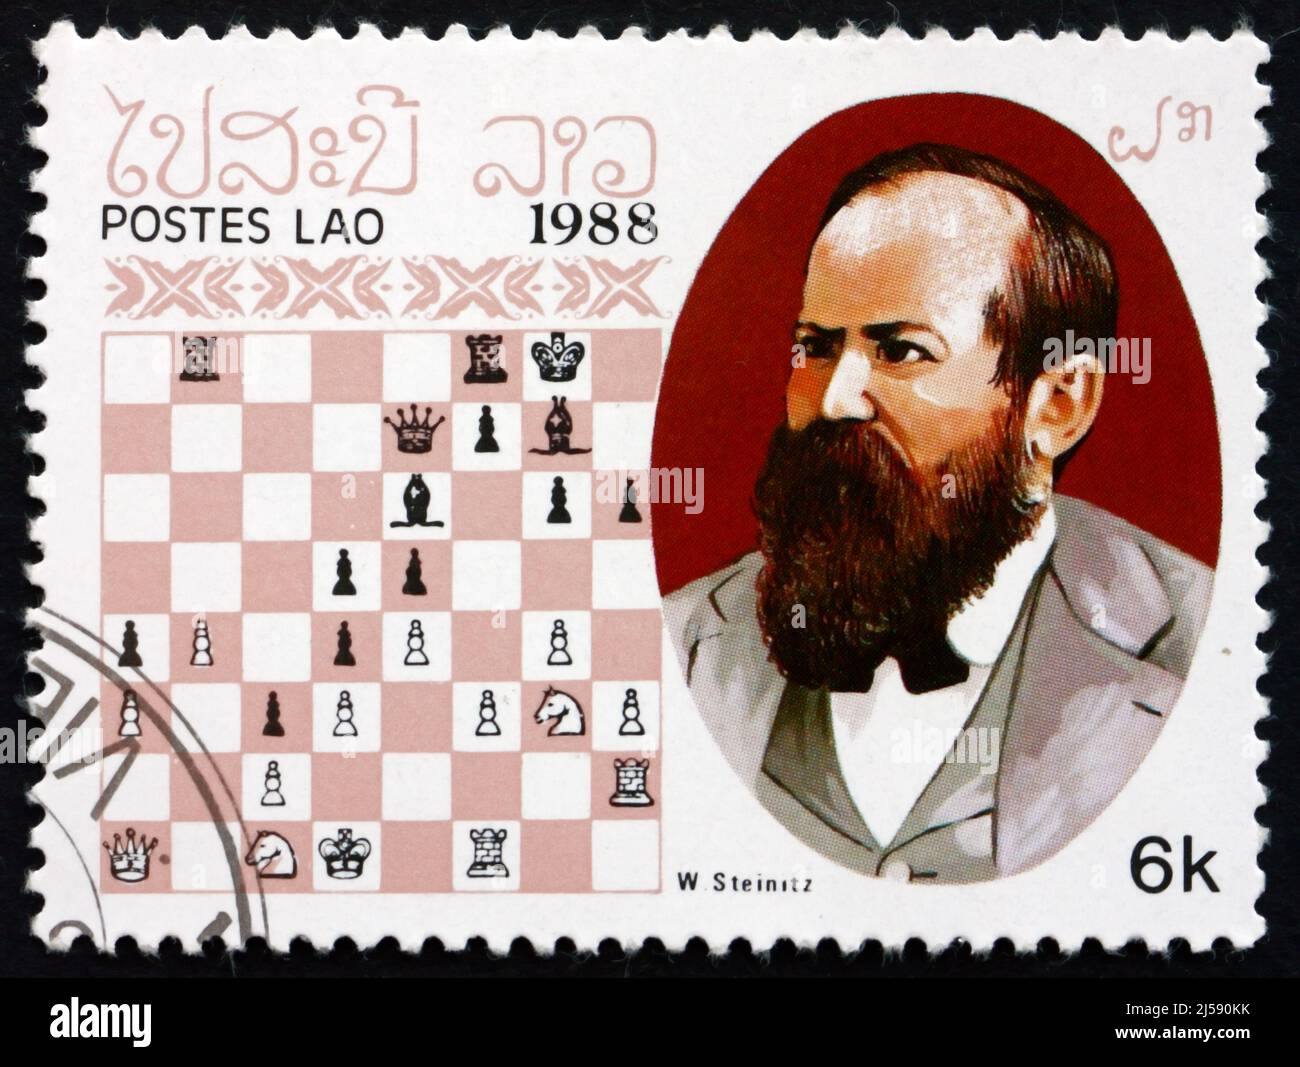 LAOS - CIRCA 1988: a stamp printed in Laos shows Wilhelm Steinitz, Austrian Chess Player, Chess Champion, circa 1988 Stock Photo